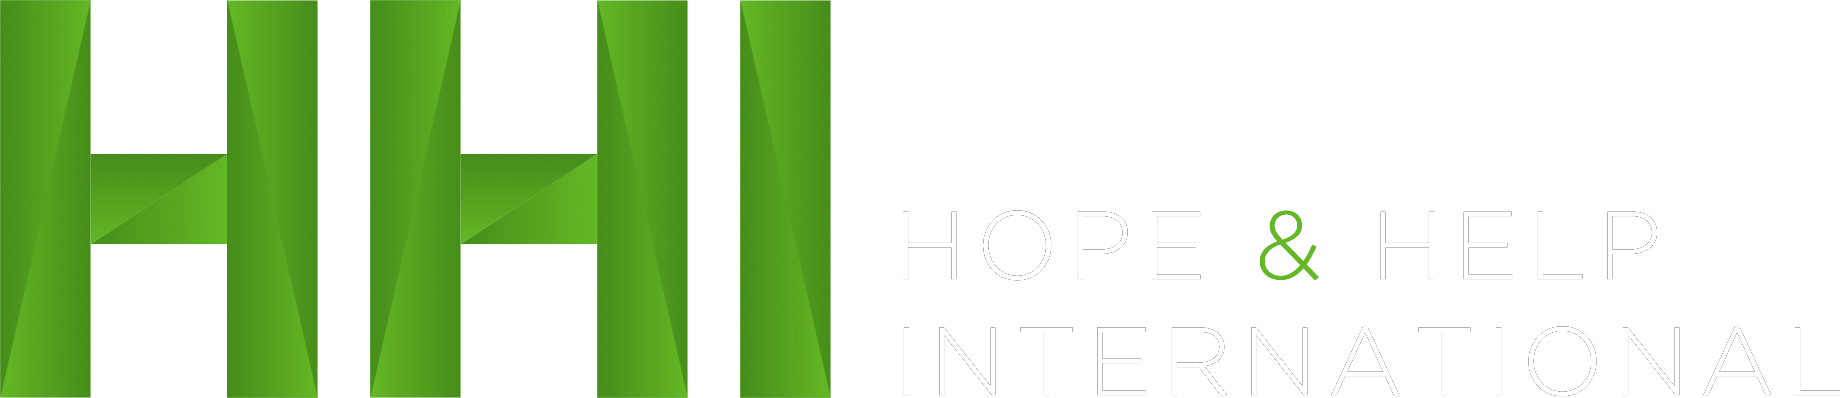 Hope & Help International